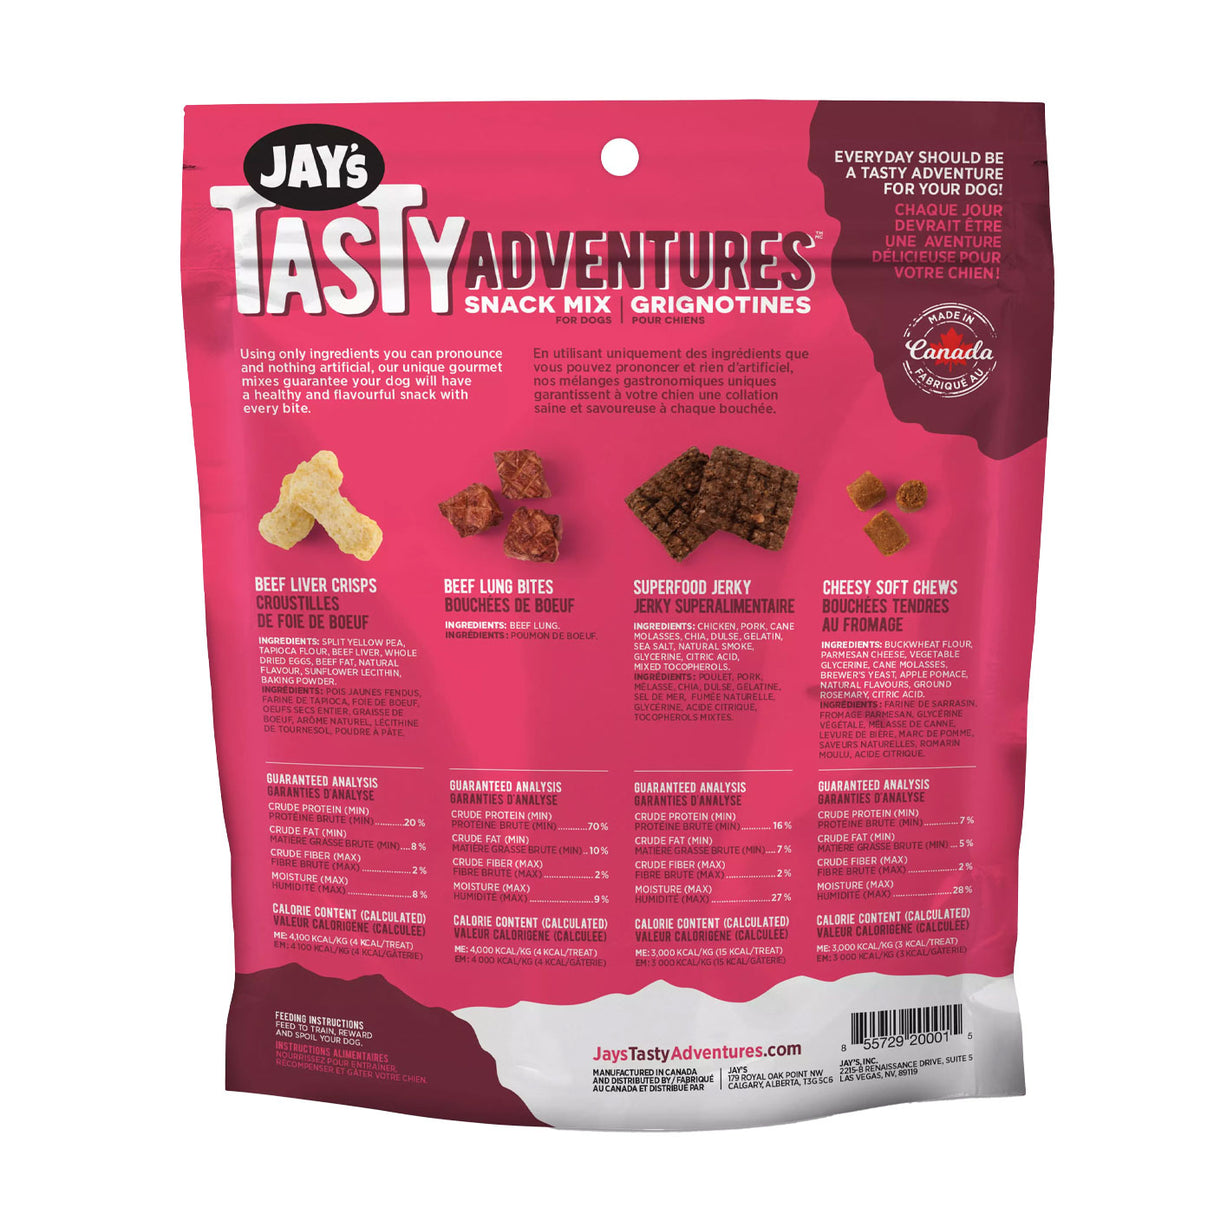 Jay's Tasty Adventures Cheesy Beef Snack Mix 200 g